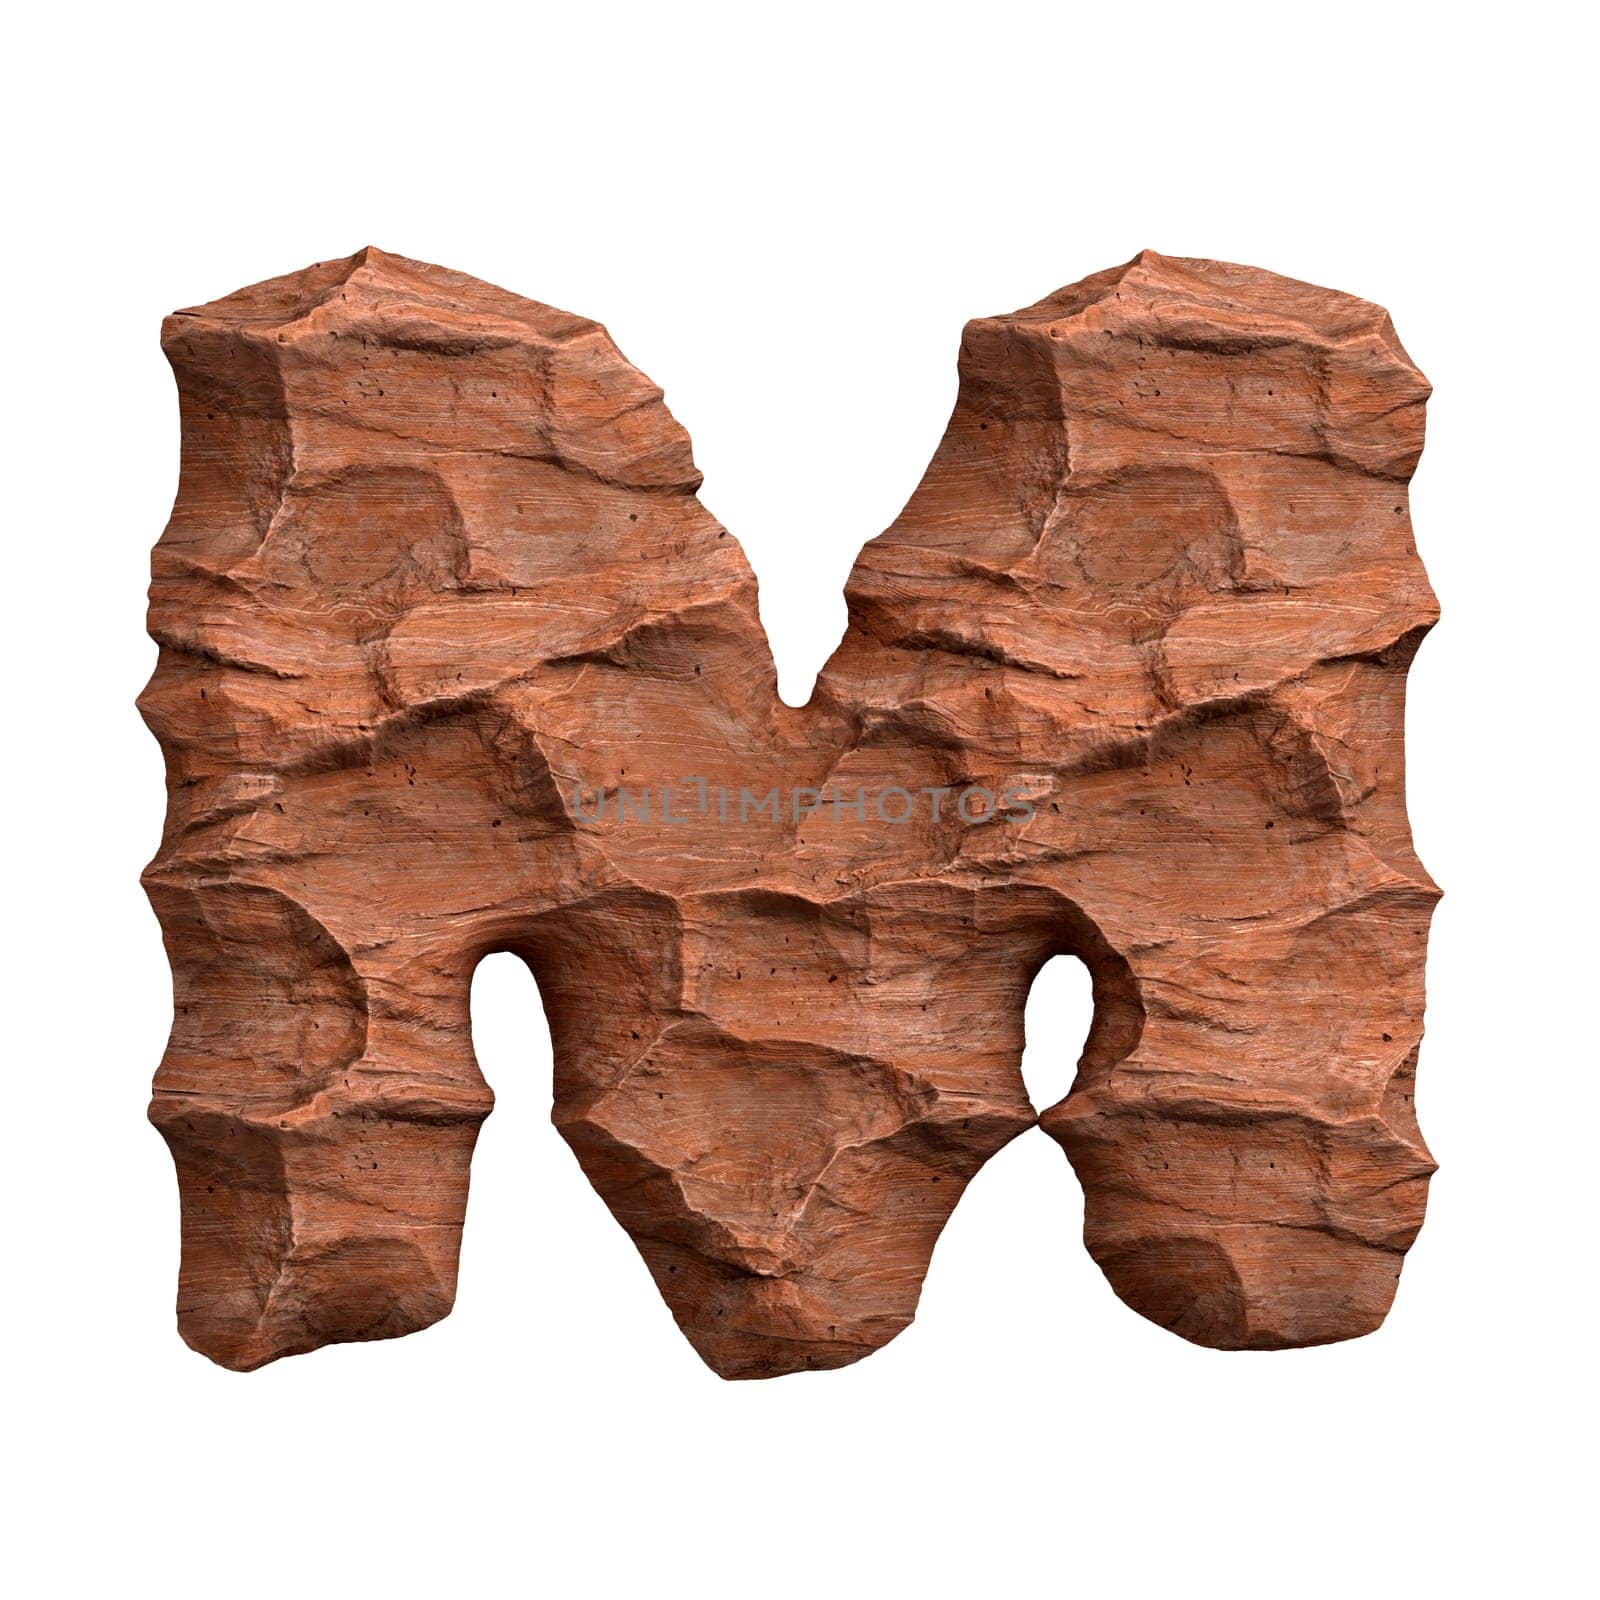 Desert sandstone letter M - Capital 3d red rock font - suitable for Arizona, geology or desert related subjects by chrisroll